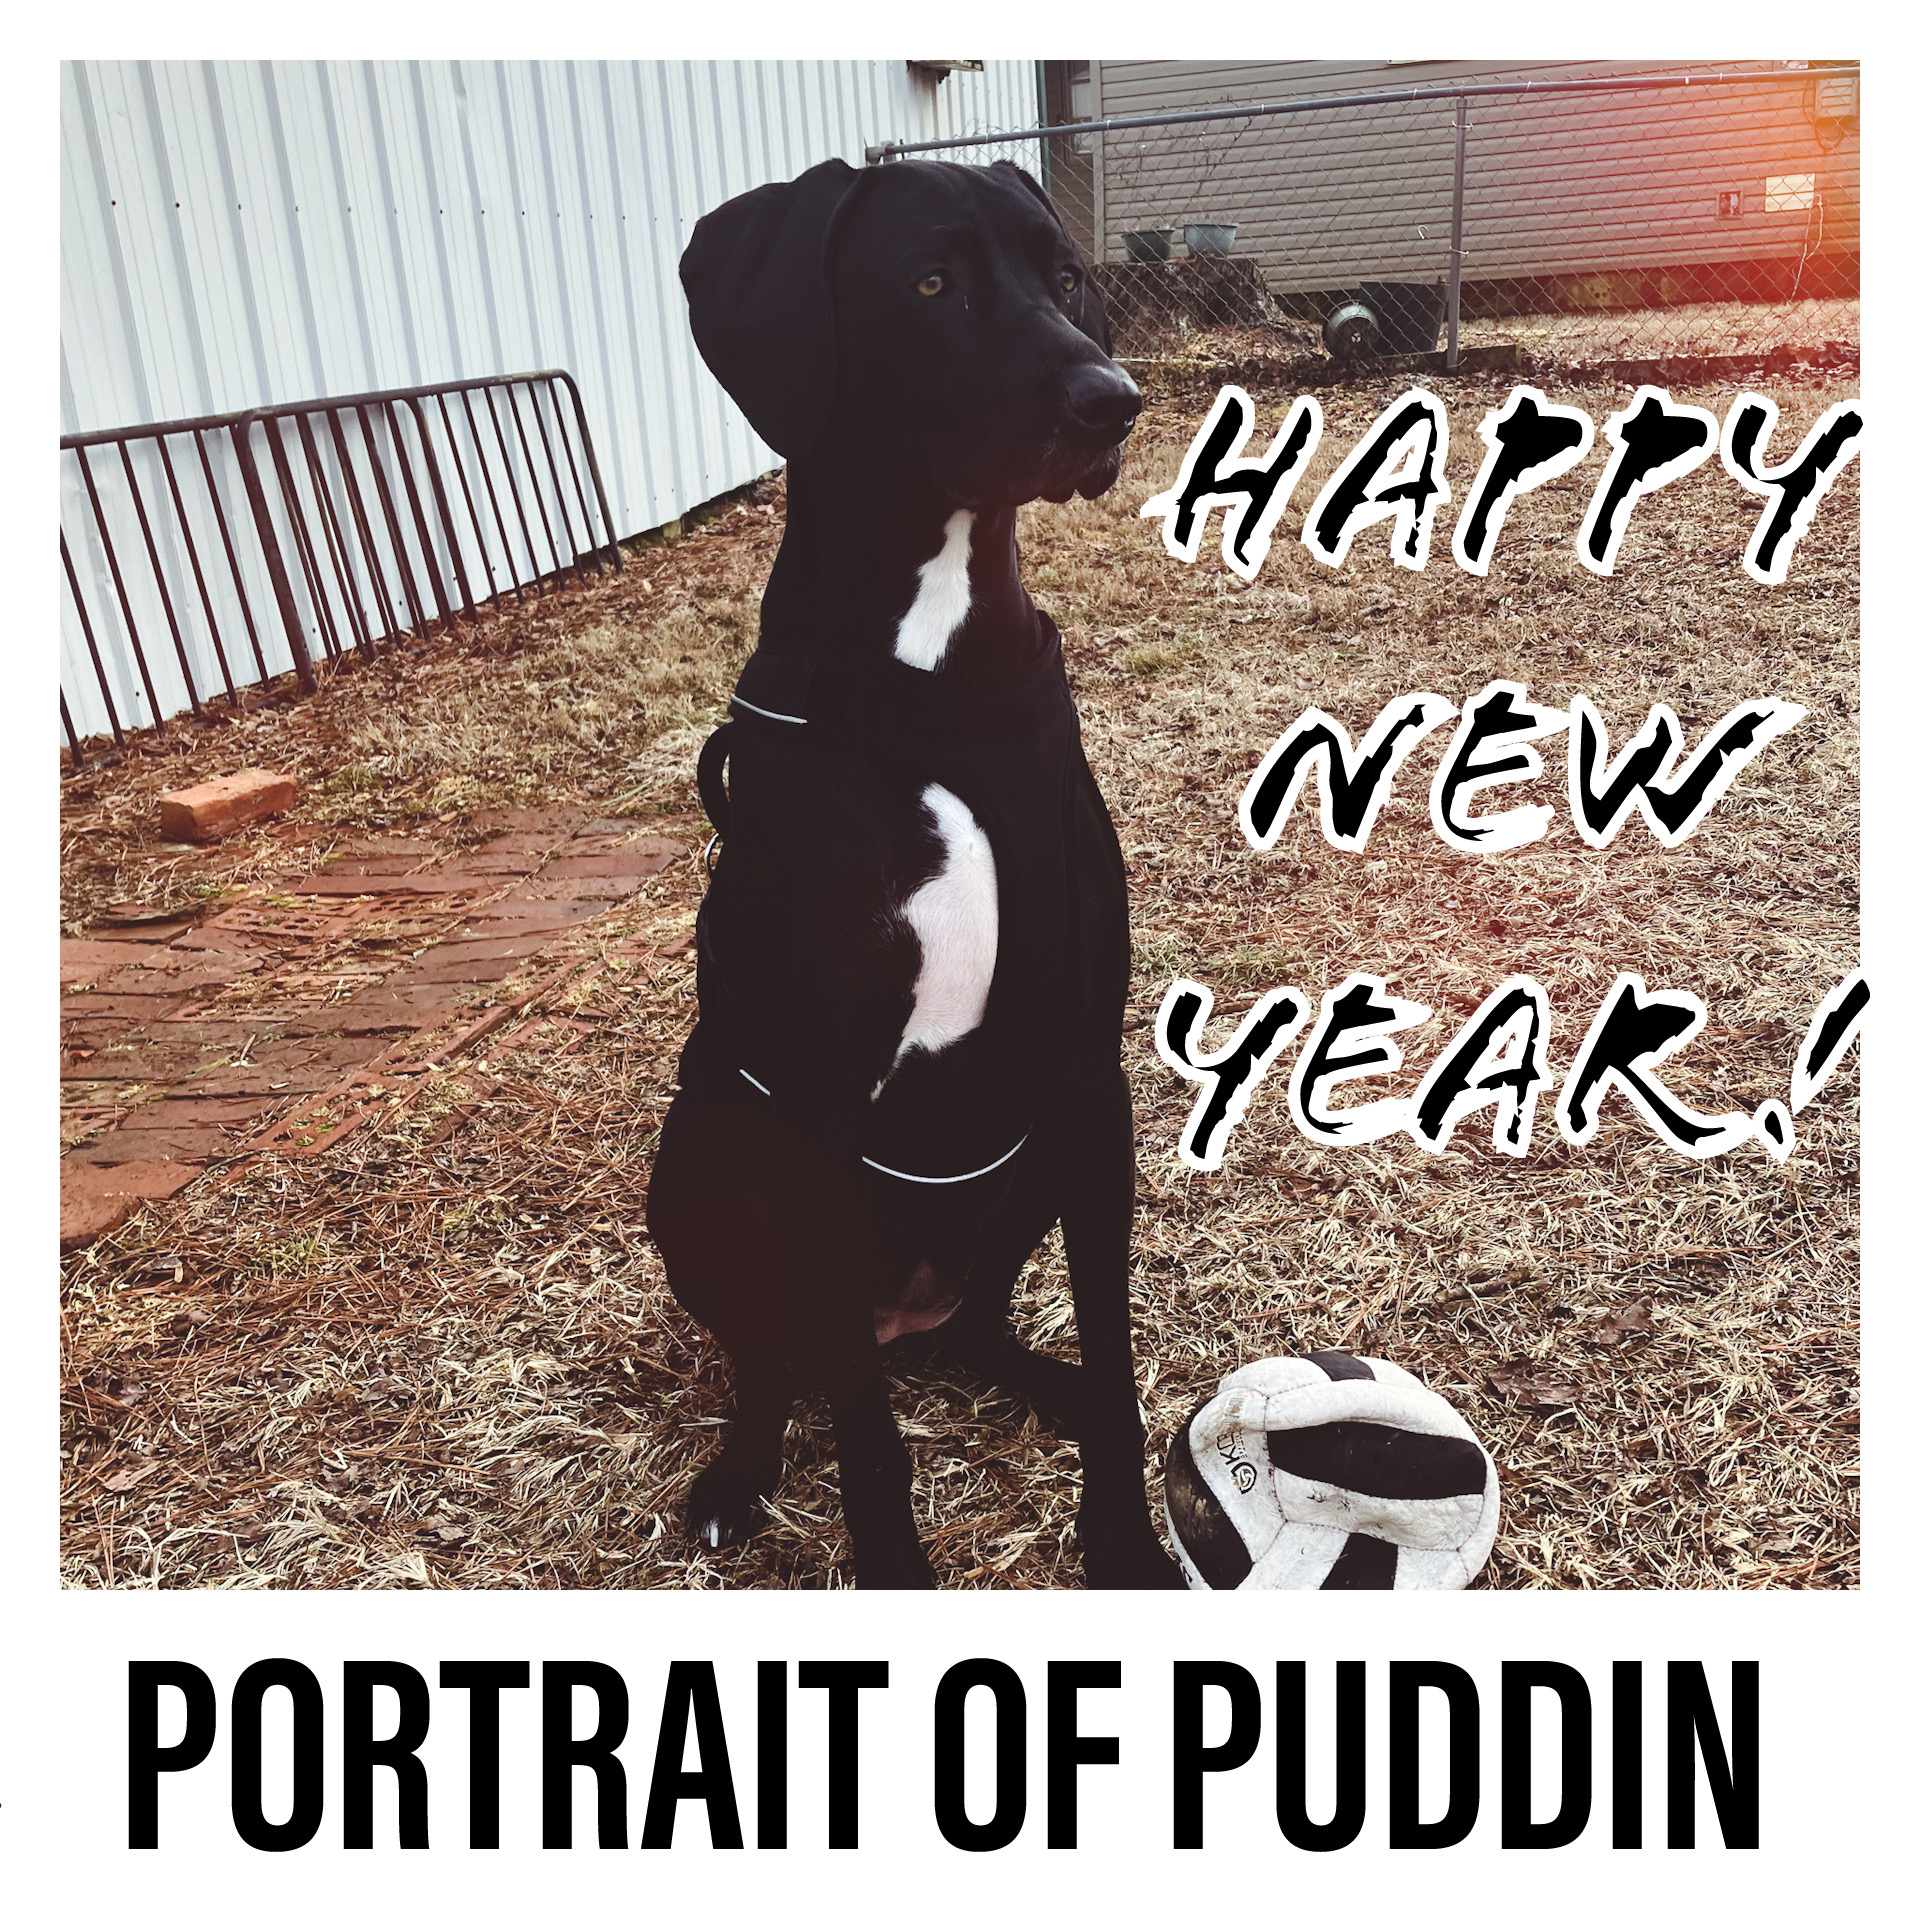 Portrait of Puddin shared on my Reddit Community r/Deep_South #ITisandiamIT